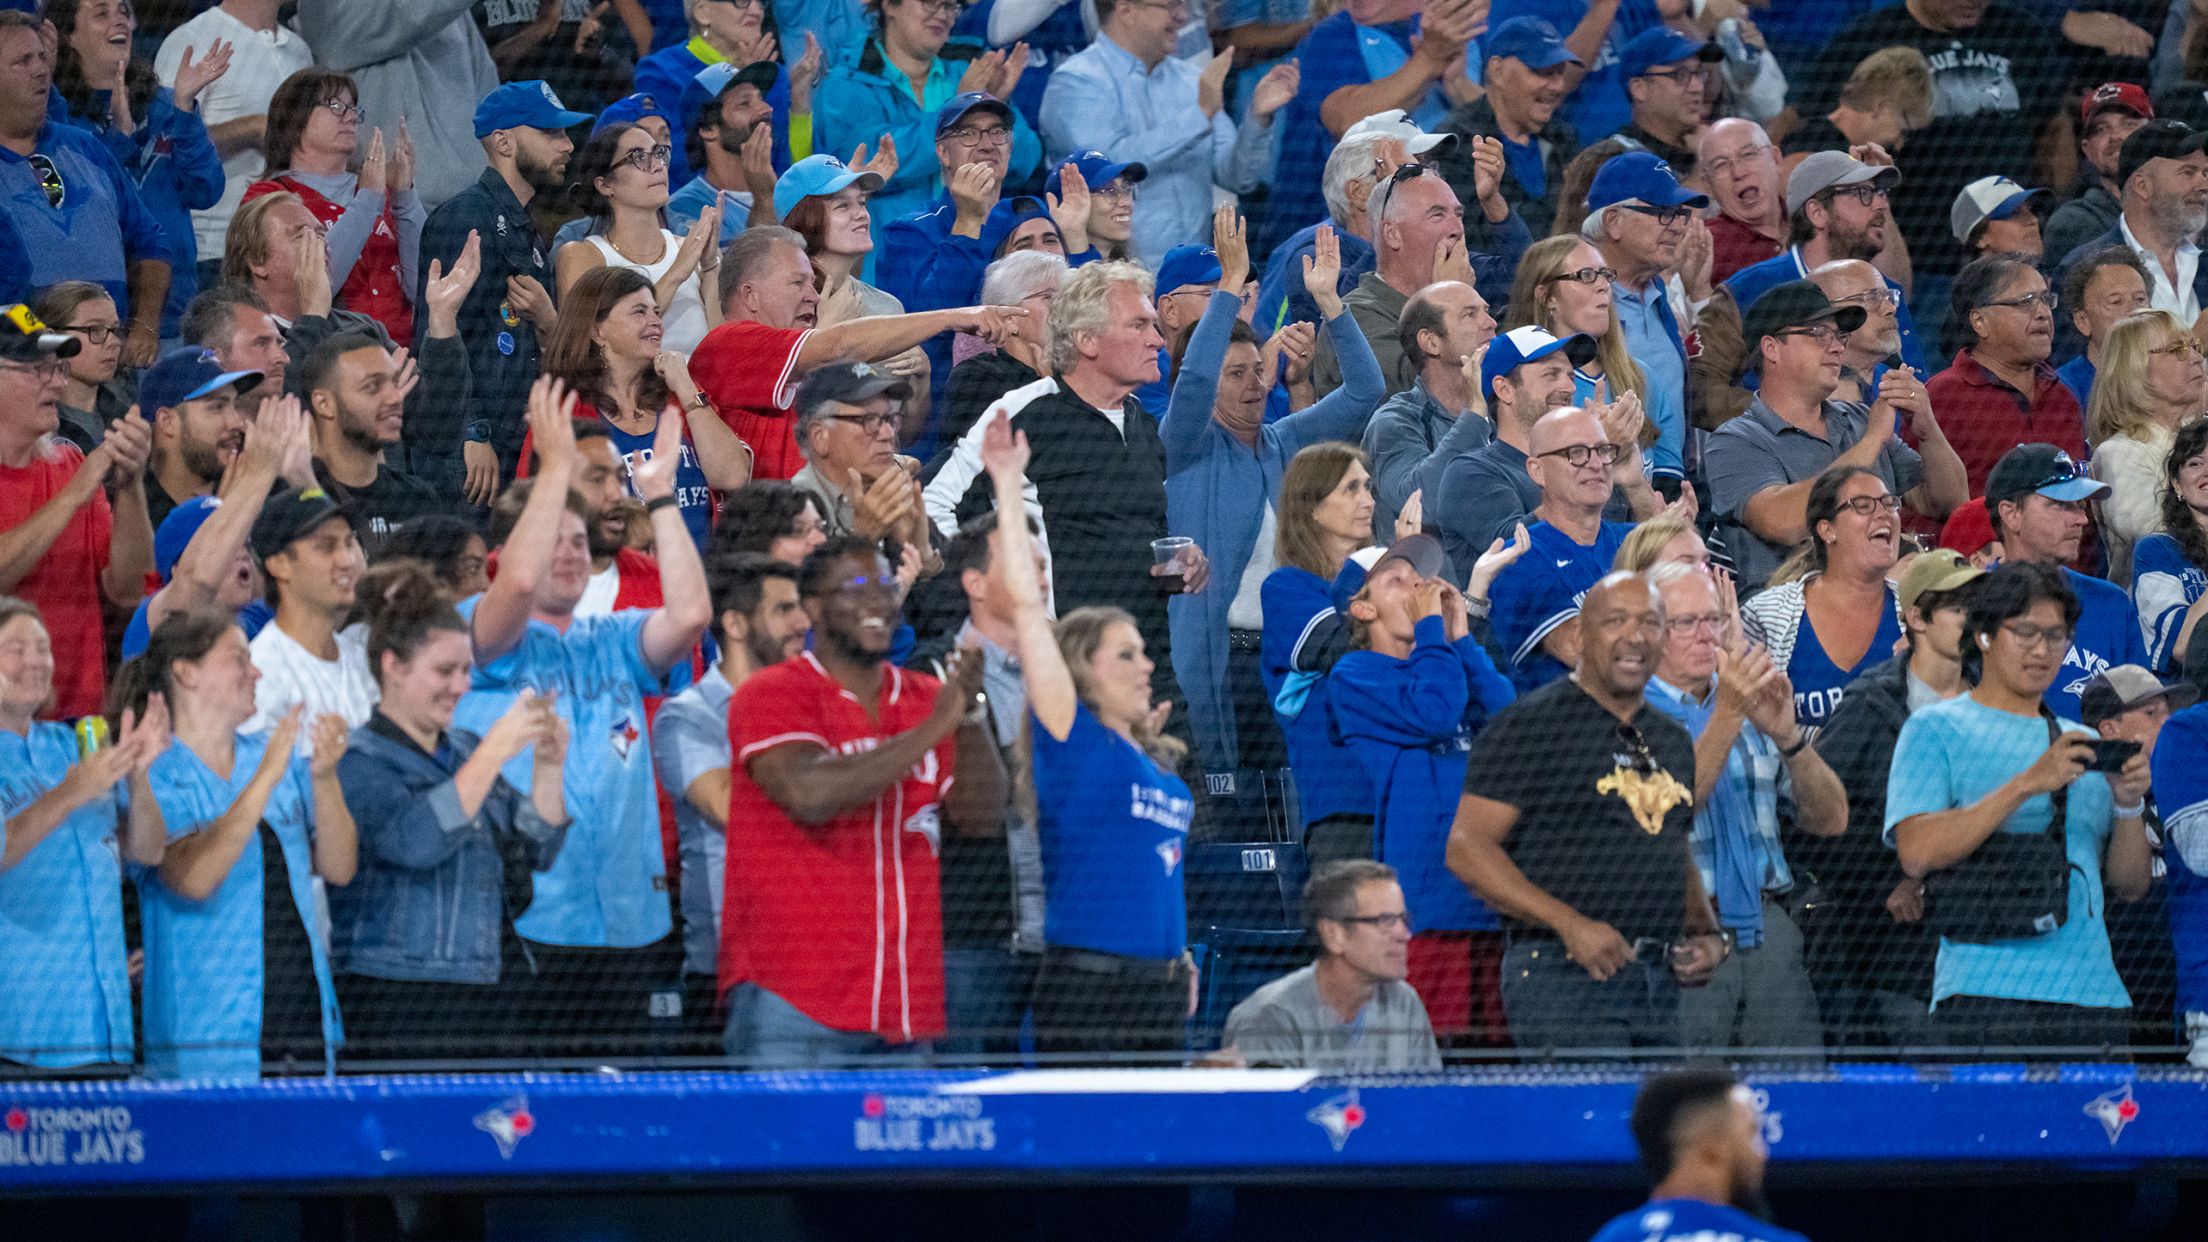 Toronto Blue Jays on X: Goodnight, #BlueJays fans 💙 sWWWeep